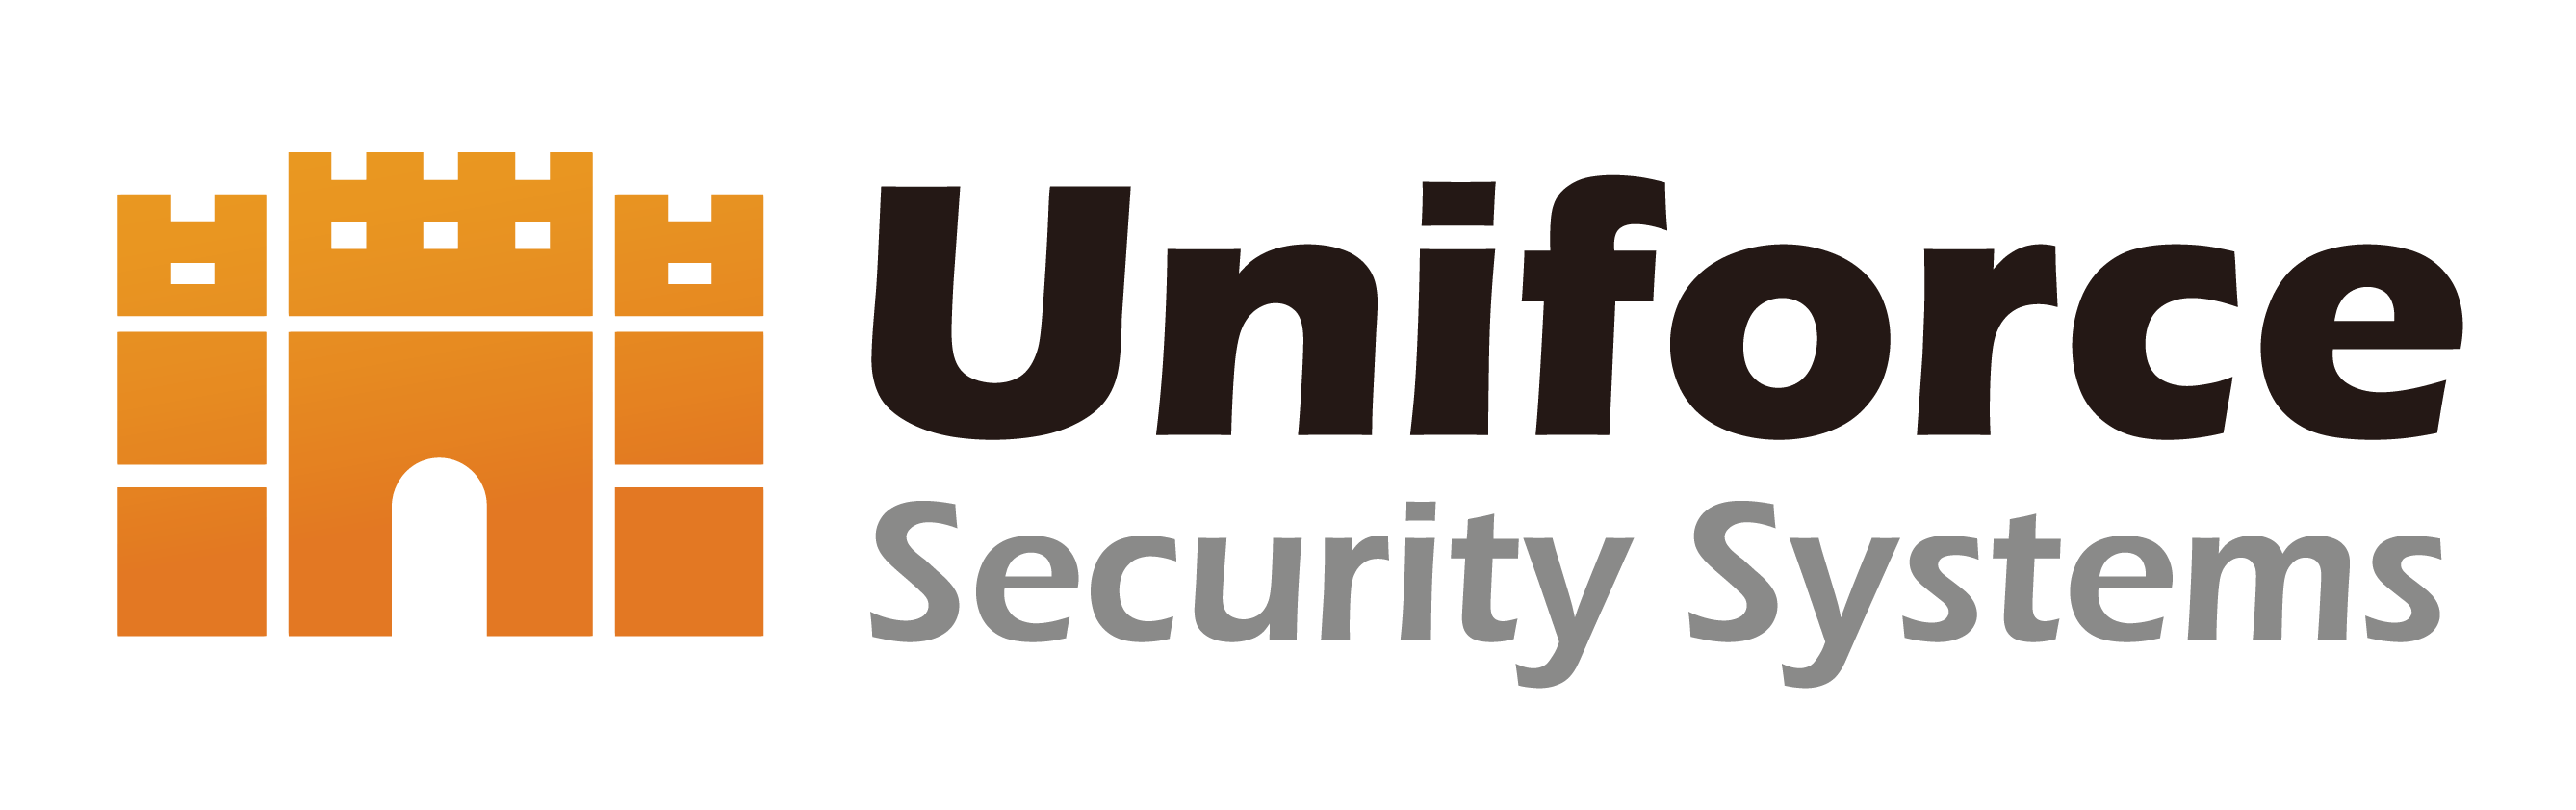 Uniforce Security Systems Ltd